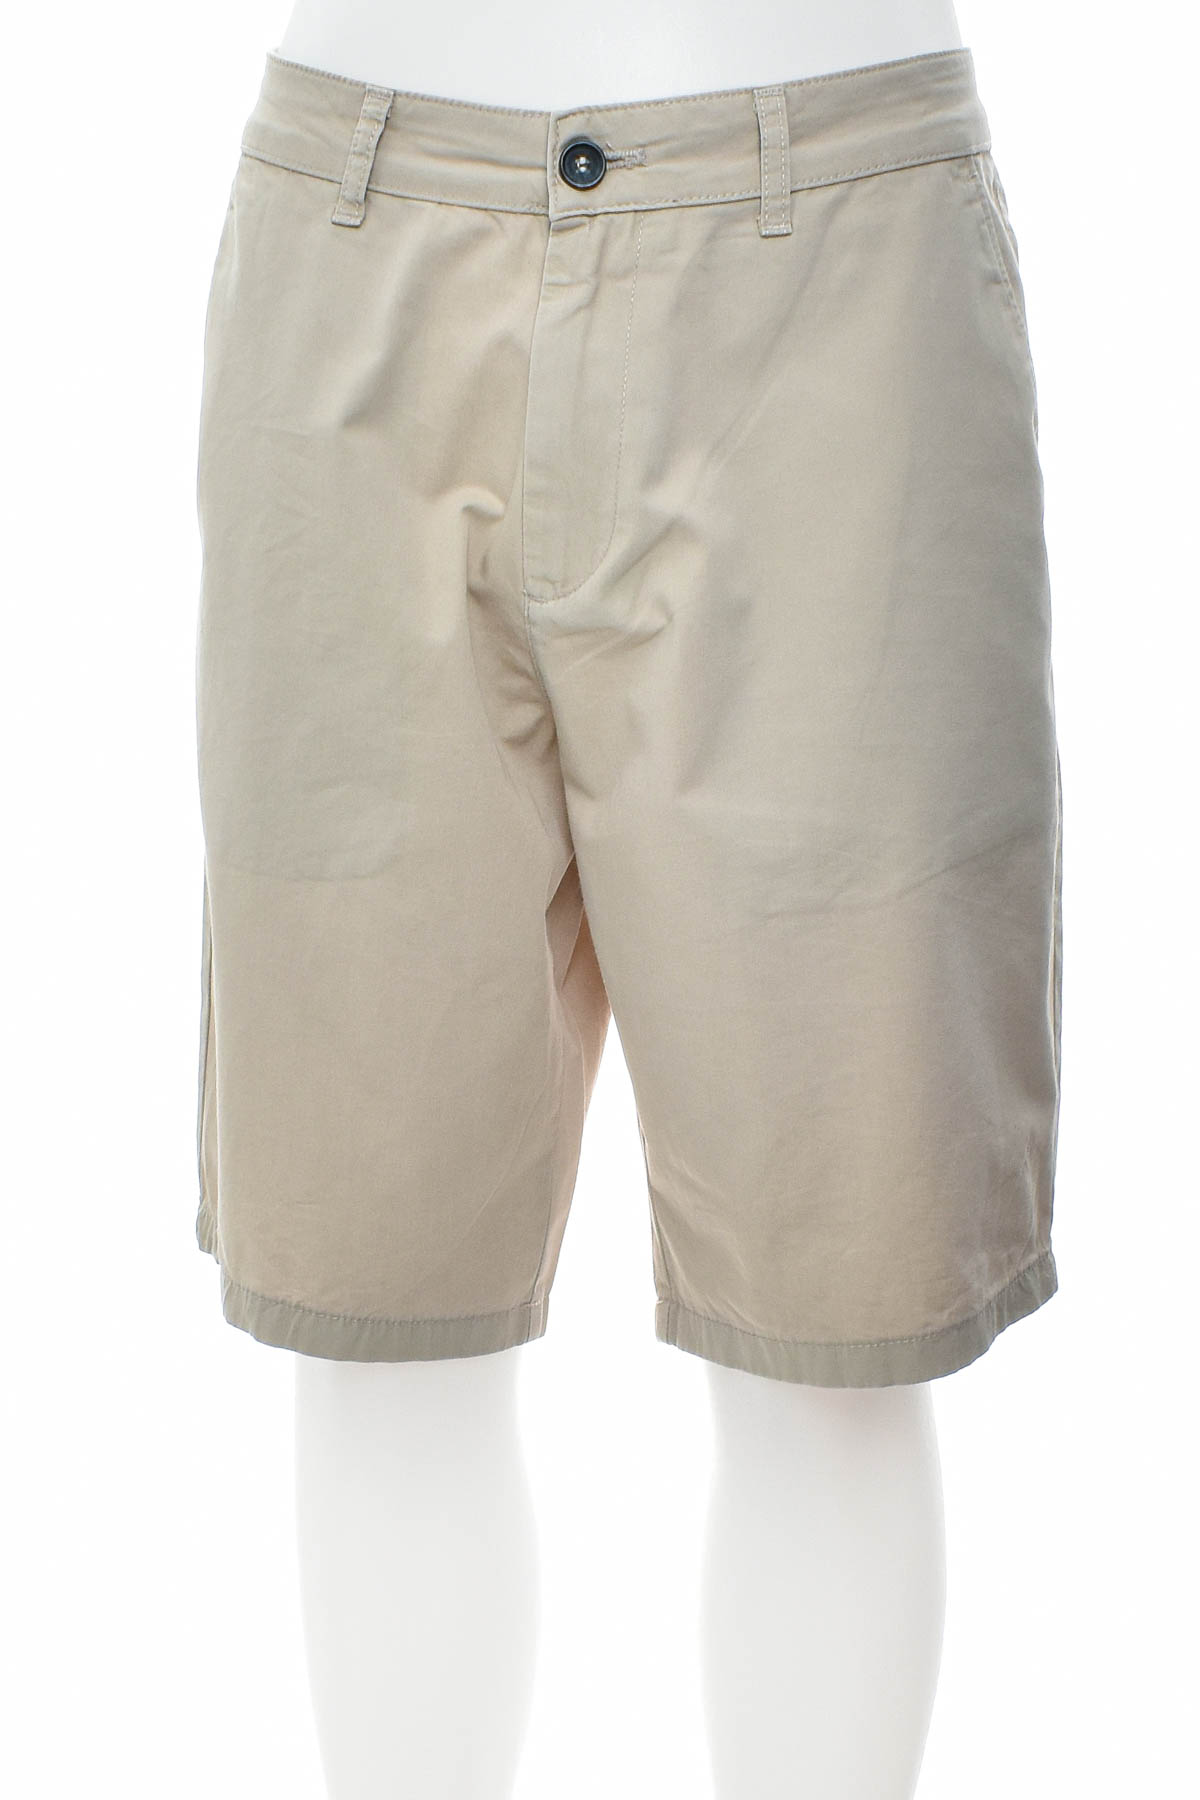 Men's shorts - Colin's - 0